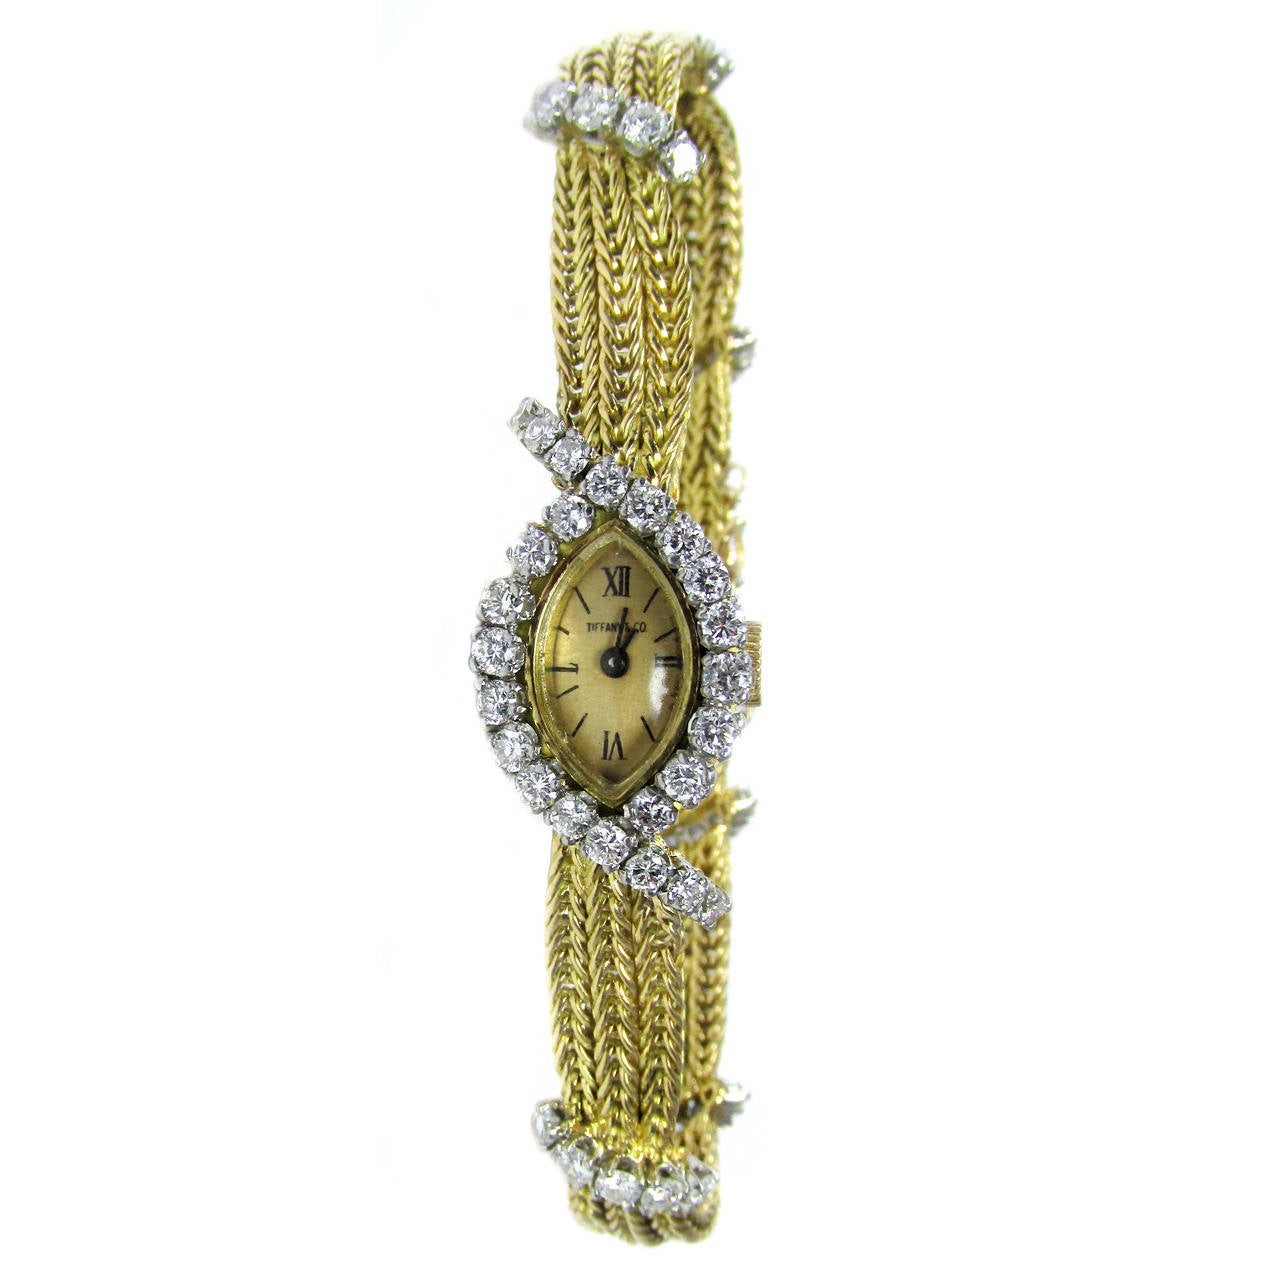 Tiffany & Co. Lady's Yellow Gold and Diamond Bracelet Watch circa 1960s